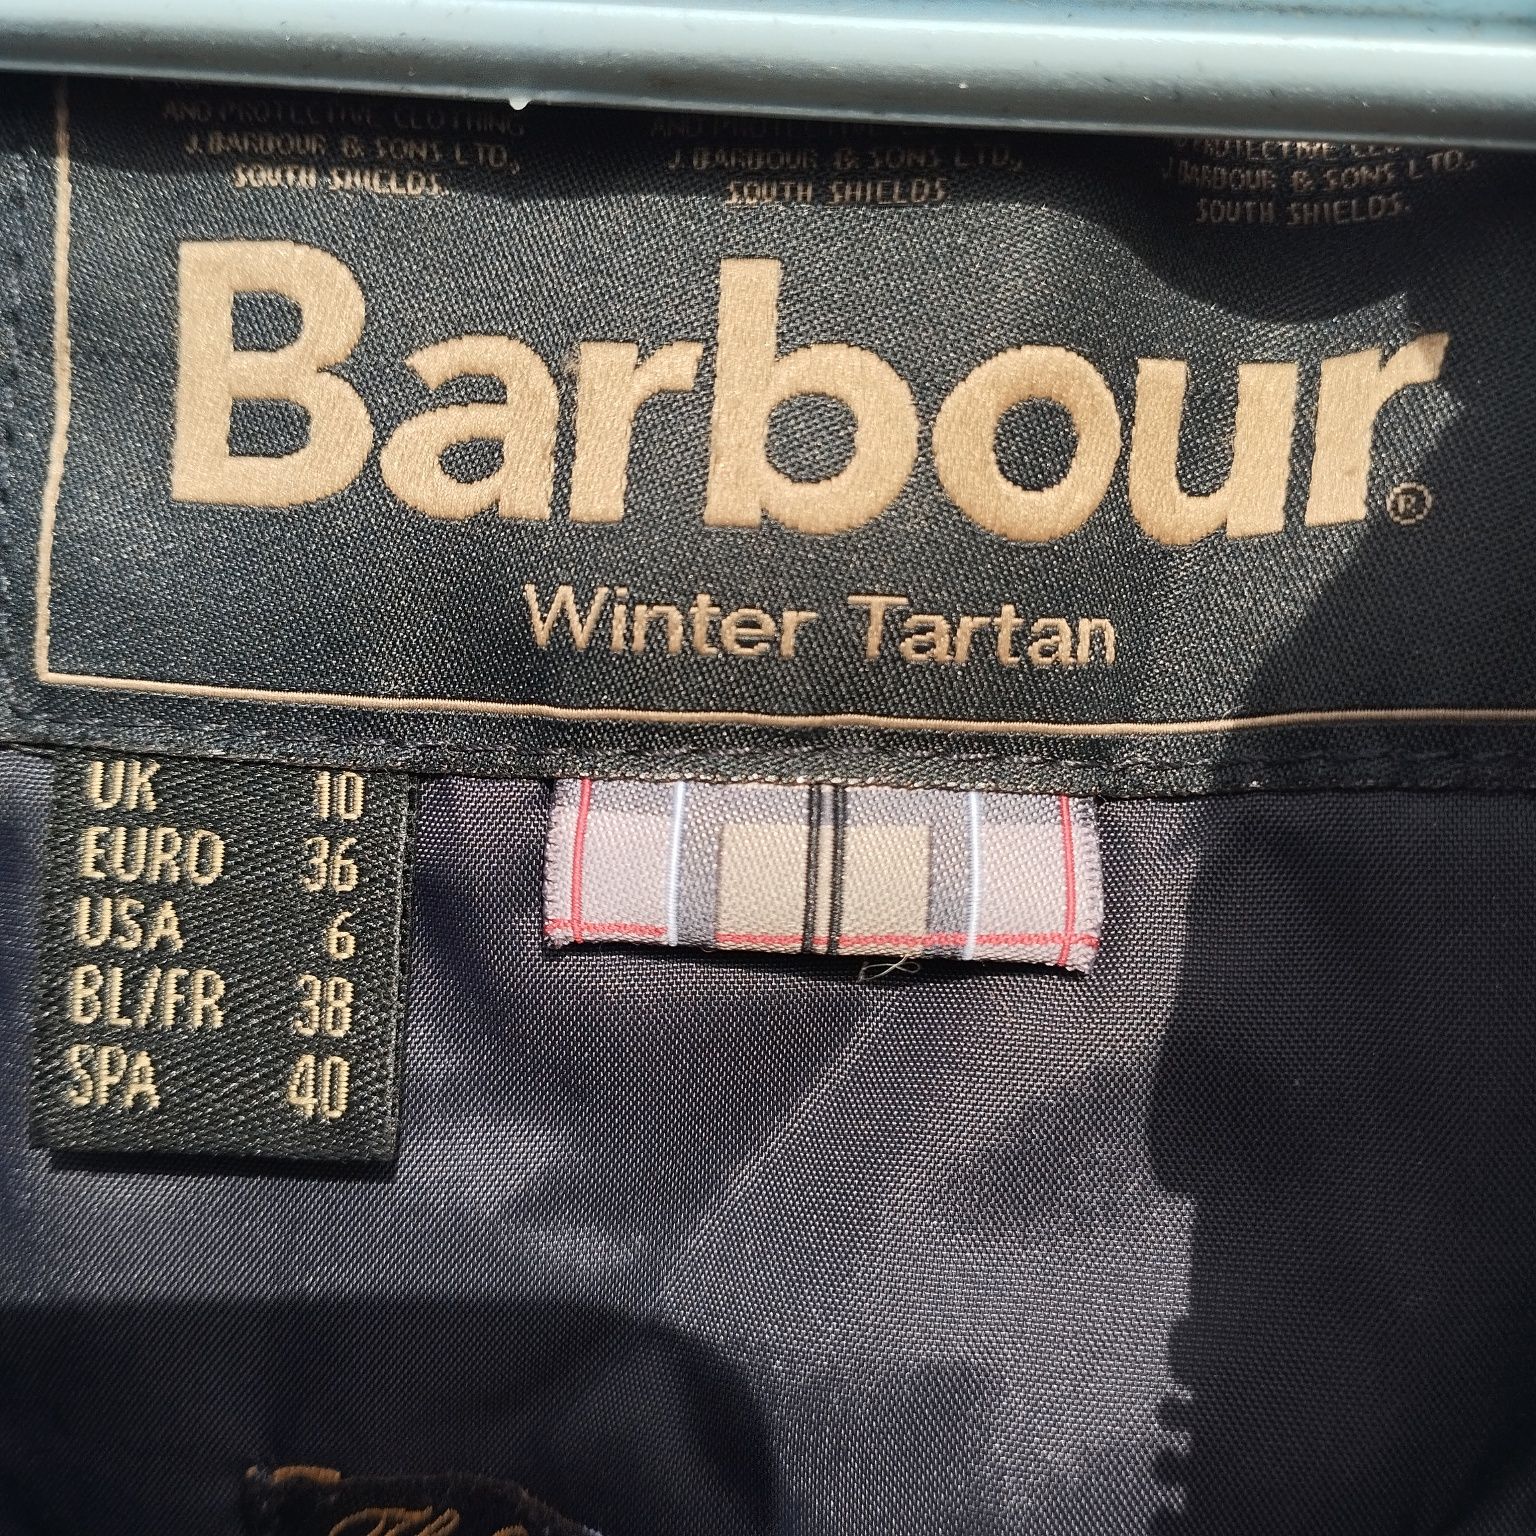 Barbour winter tartan wax.